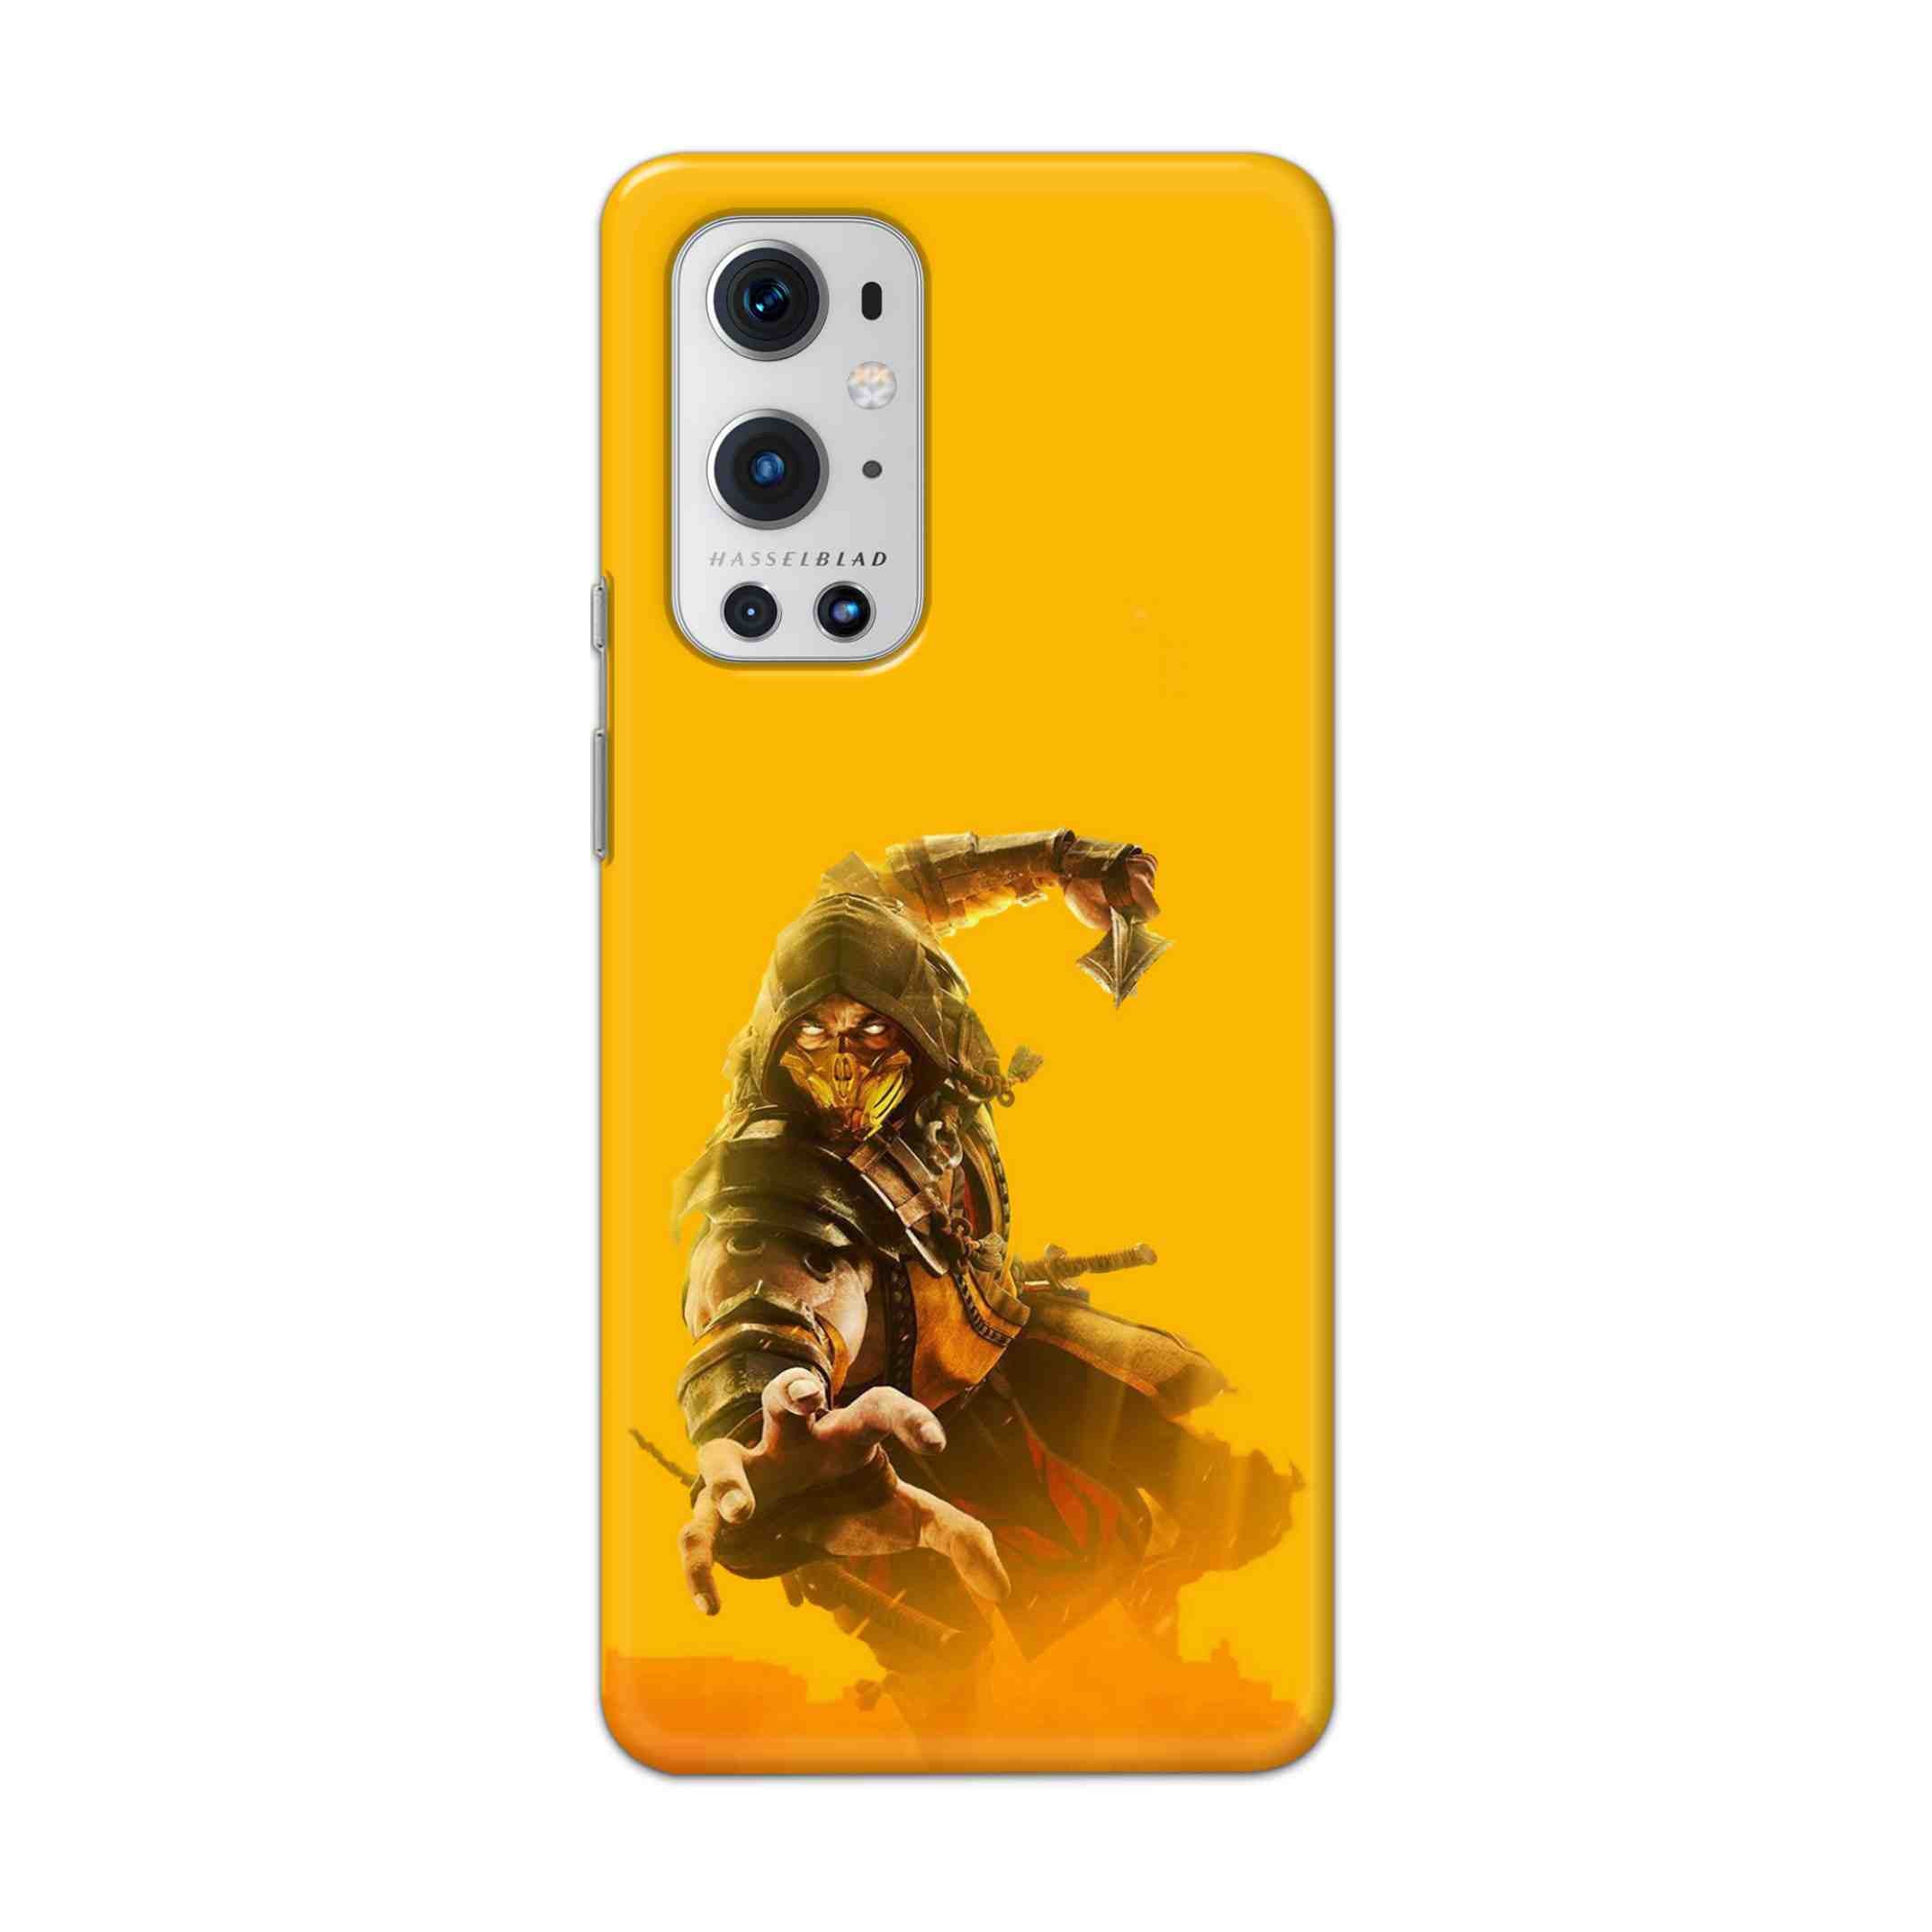 Buy Mortal Kombat Hard Back Mobile Phone Case Cover For OnePlus 9 Pro Online